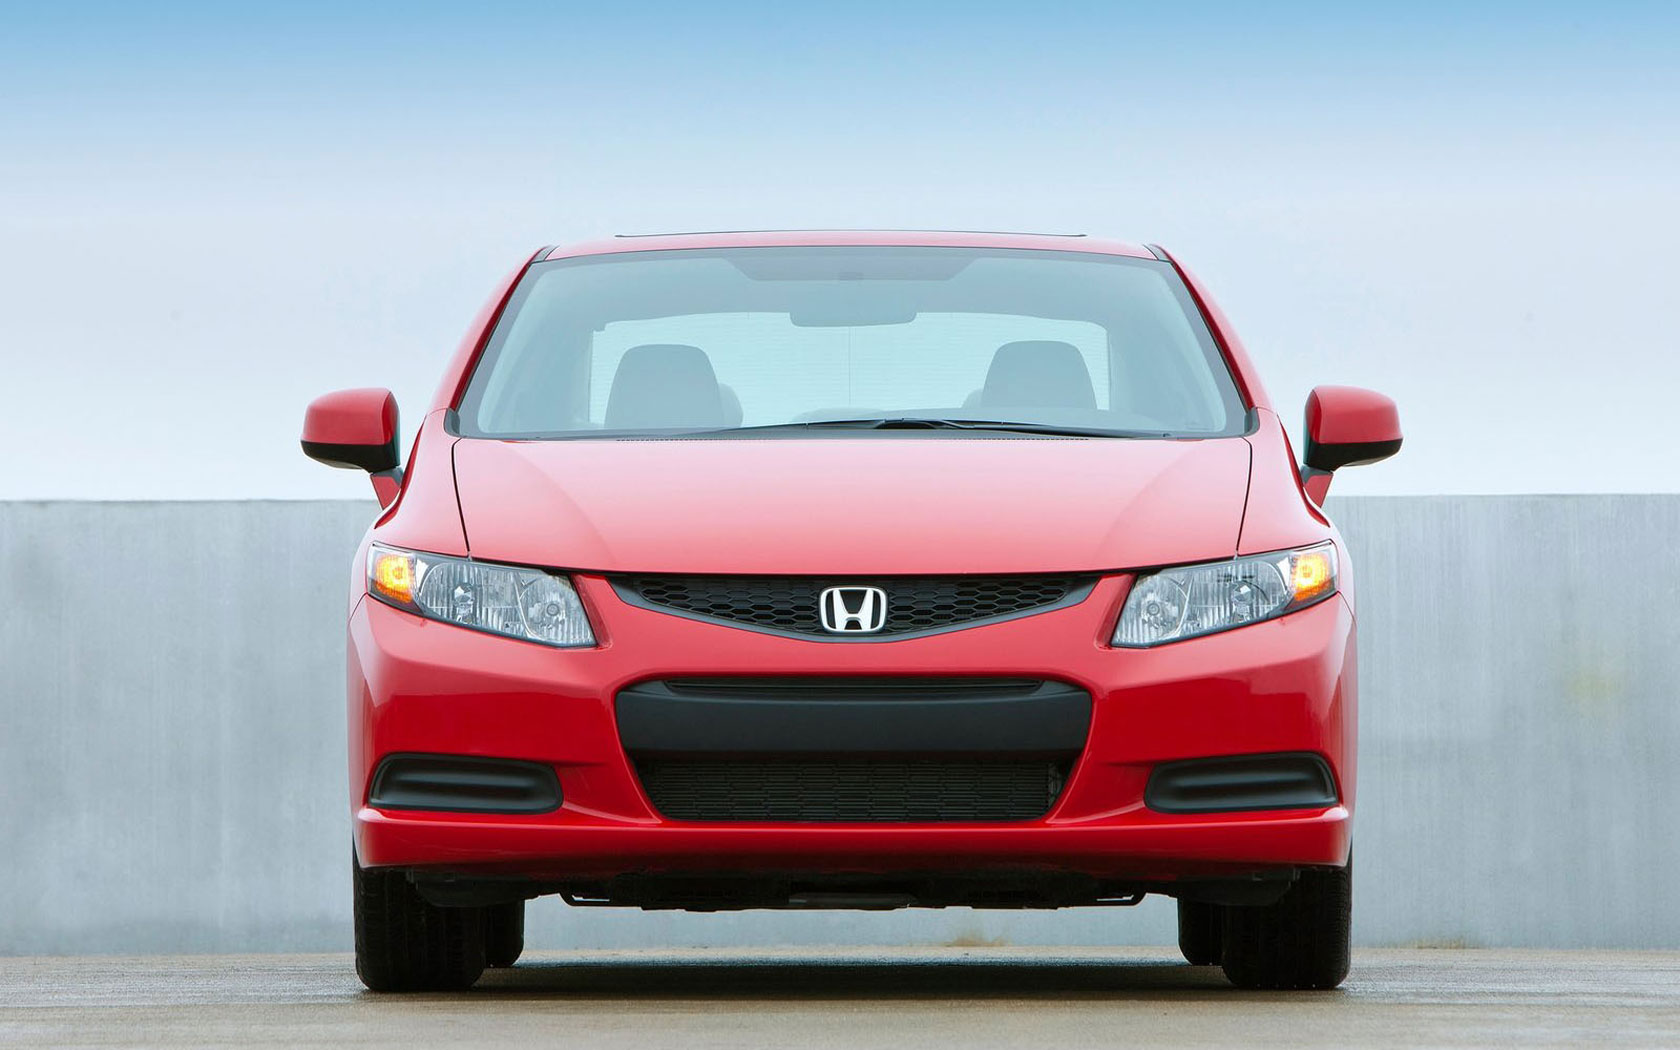  Honda Civic Coupe (2011-2015)